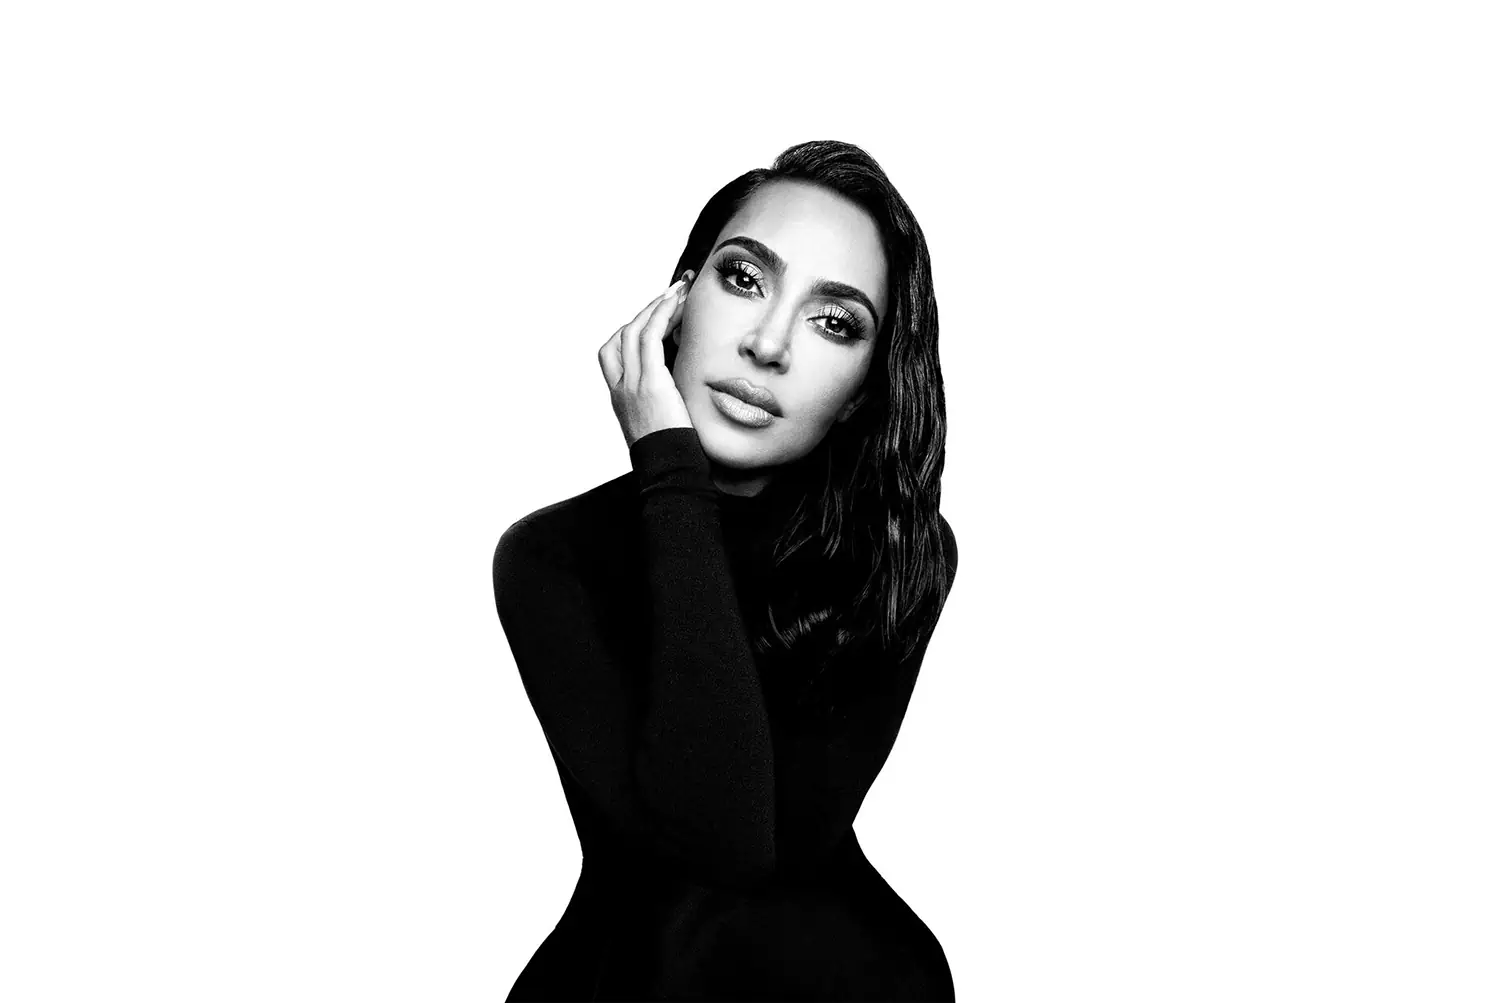 Kim Kardashian dazzles as Balenciaga's newest brand ambassador